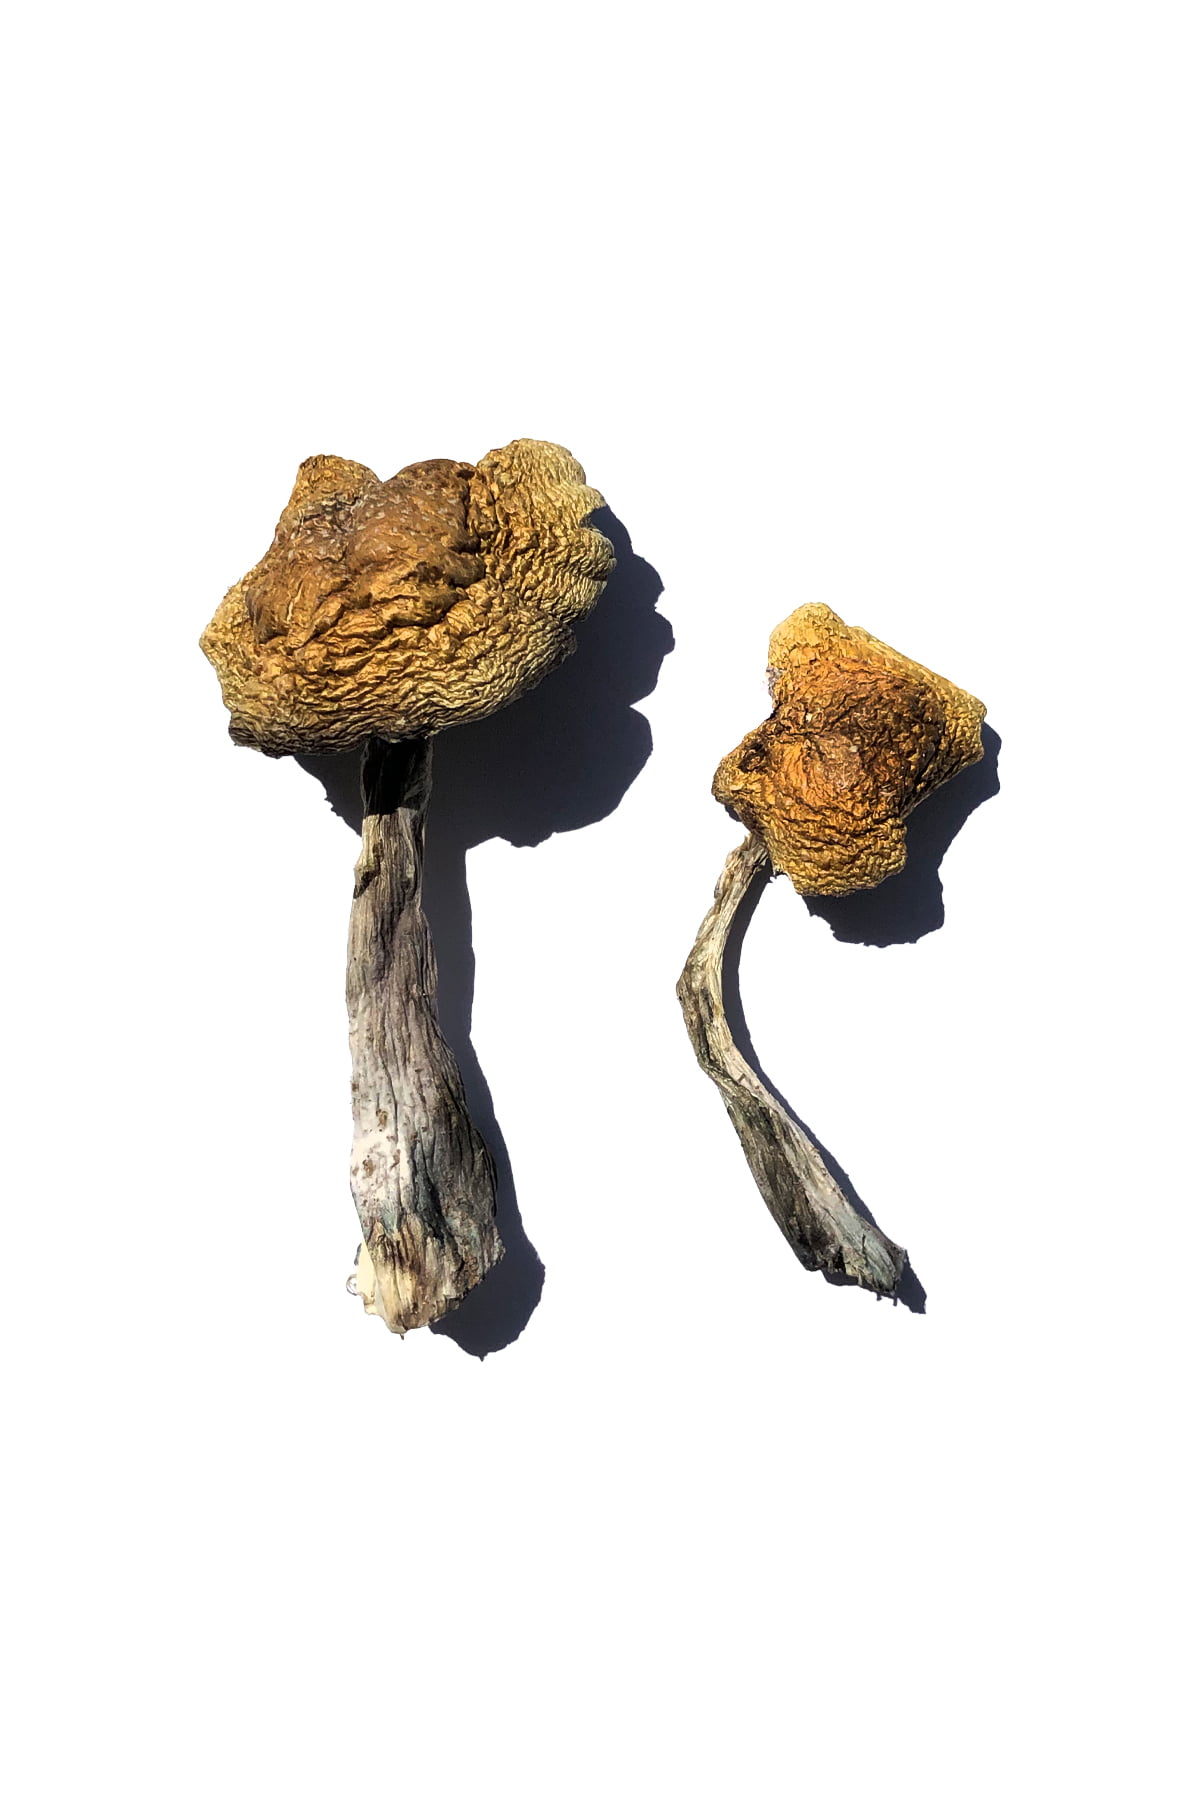 Wollongong Magic Mushrooms online kaufen .